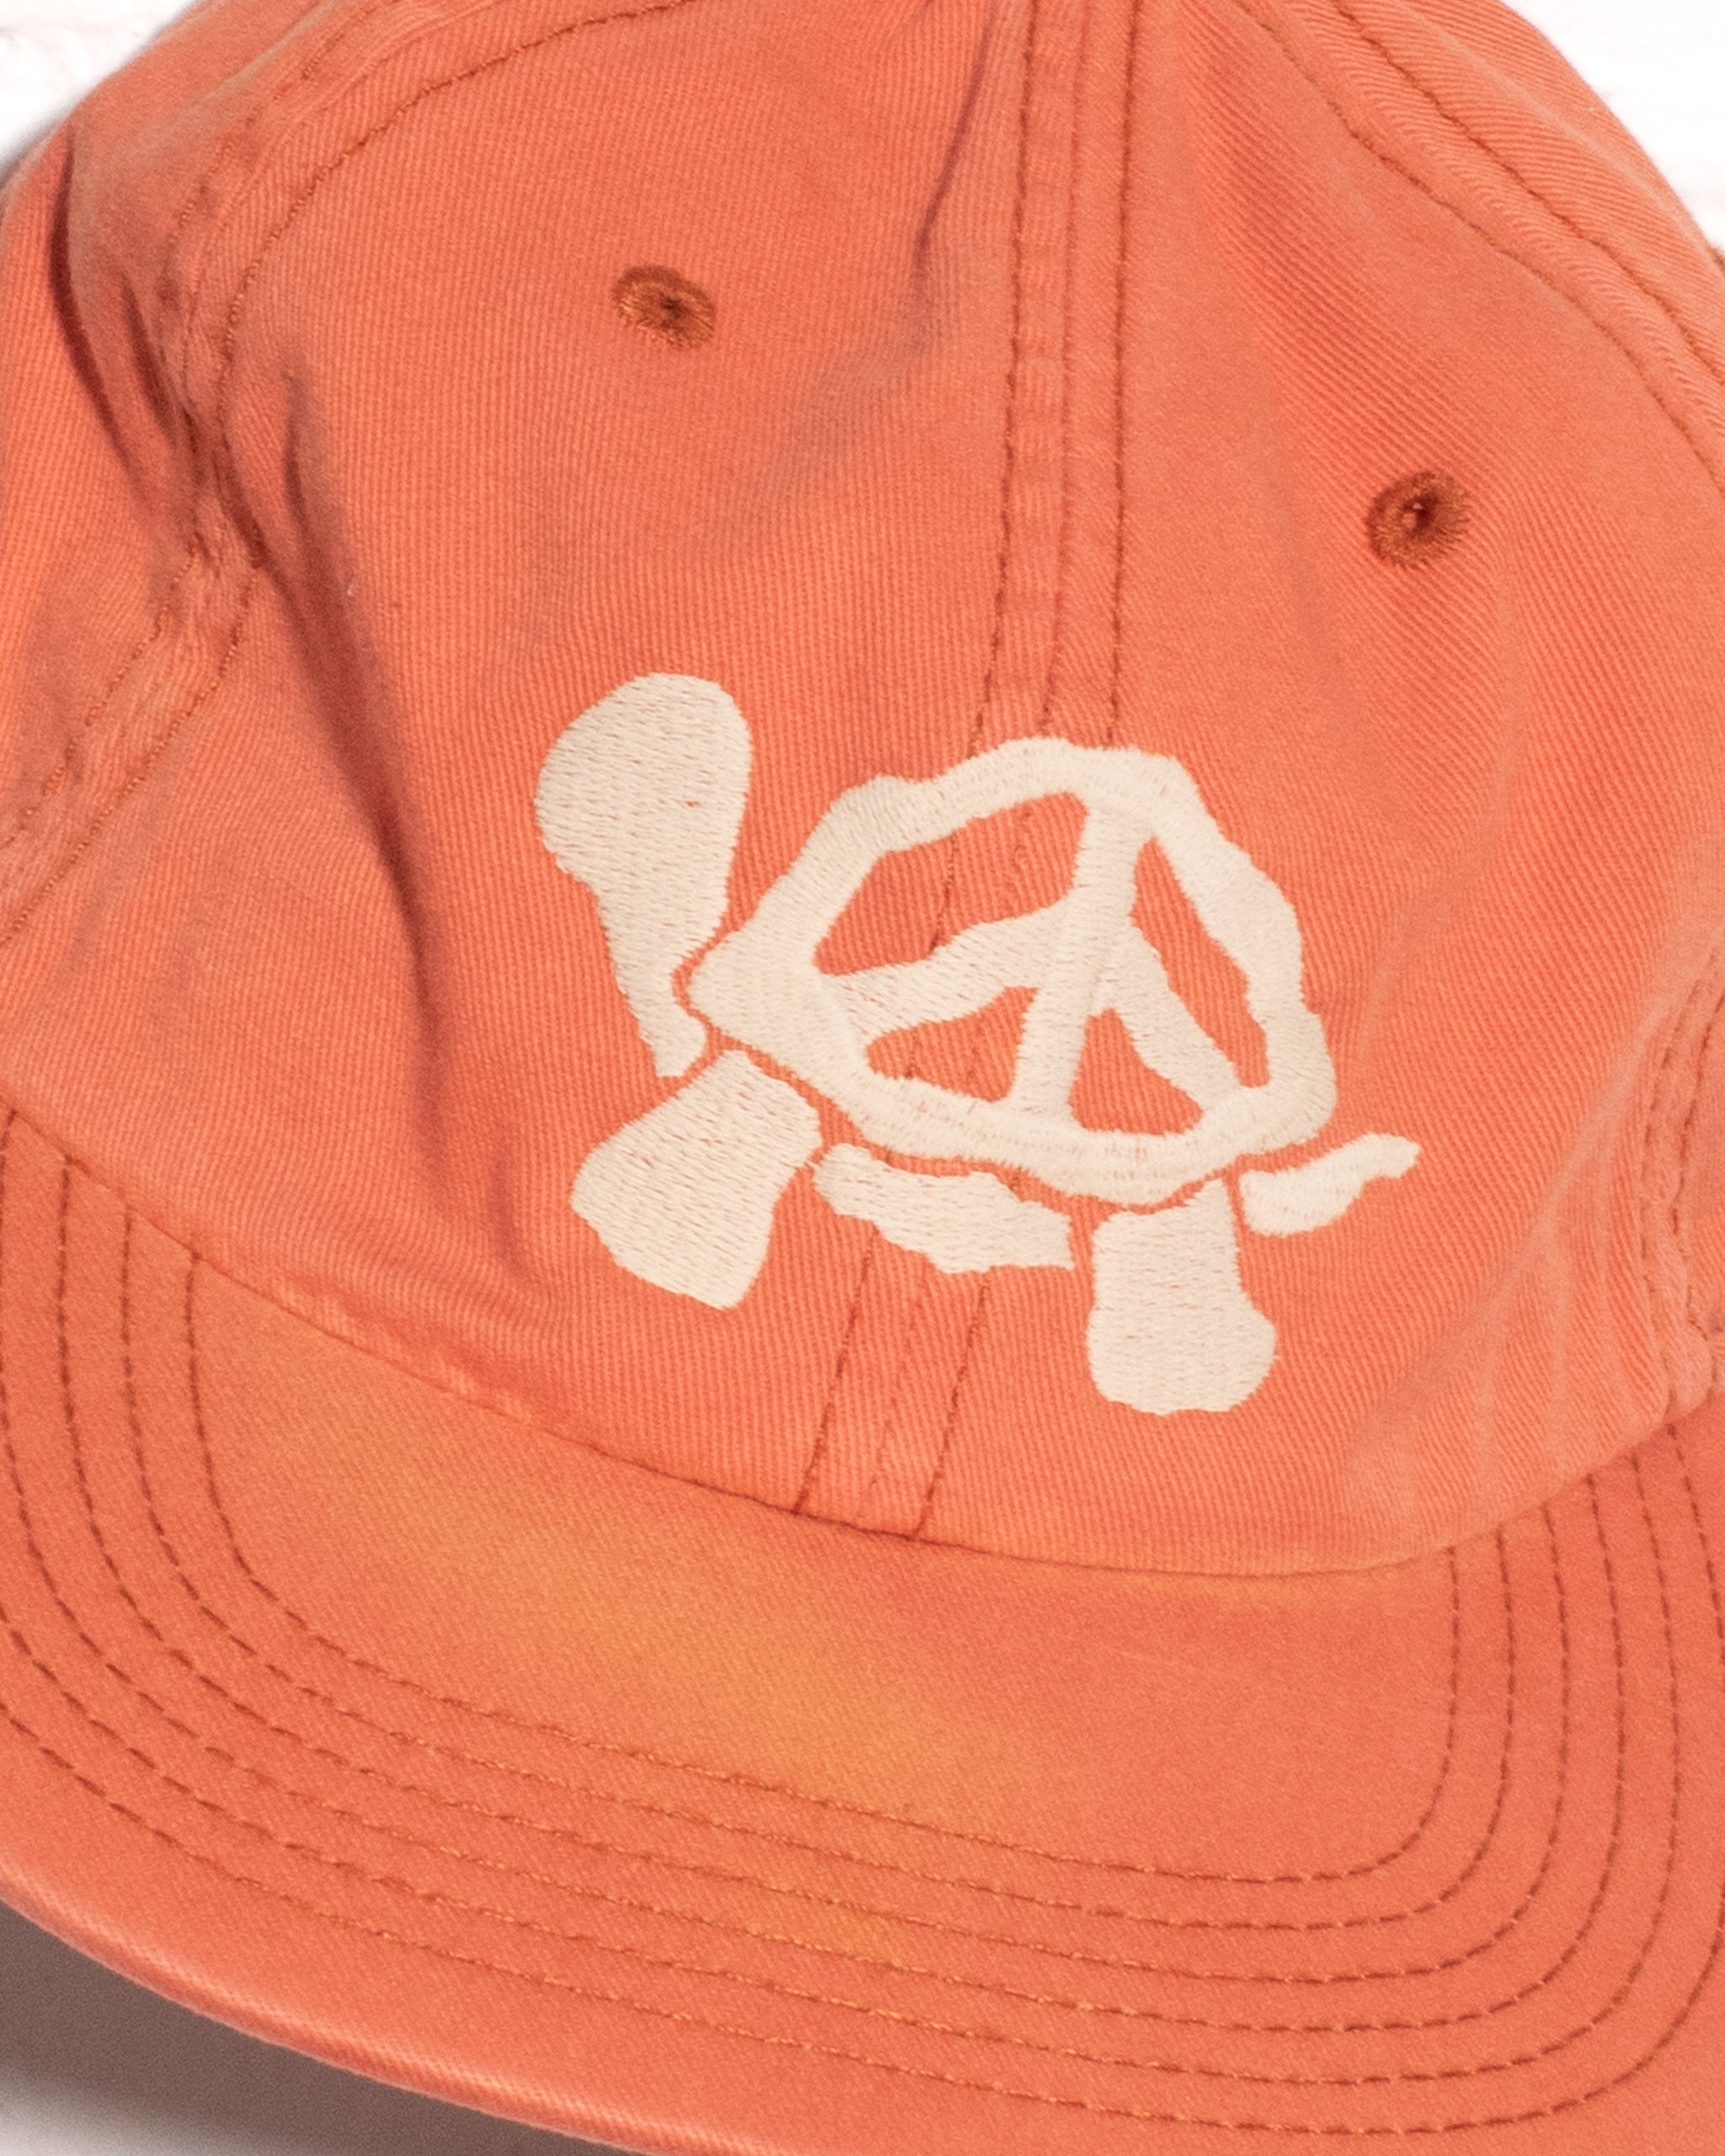 PEACE TURTLE hat